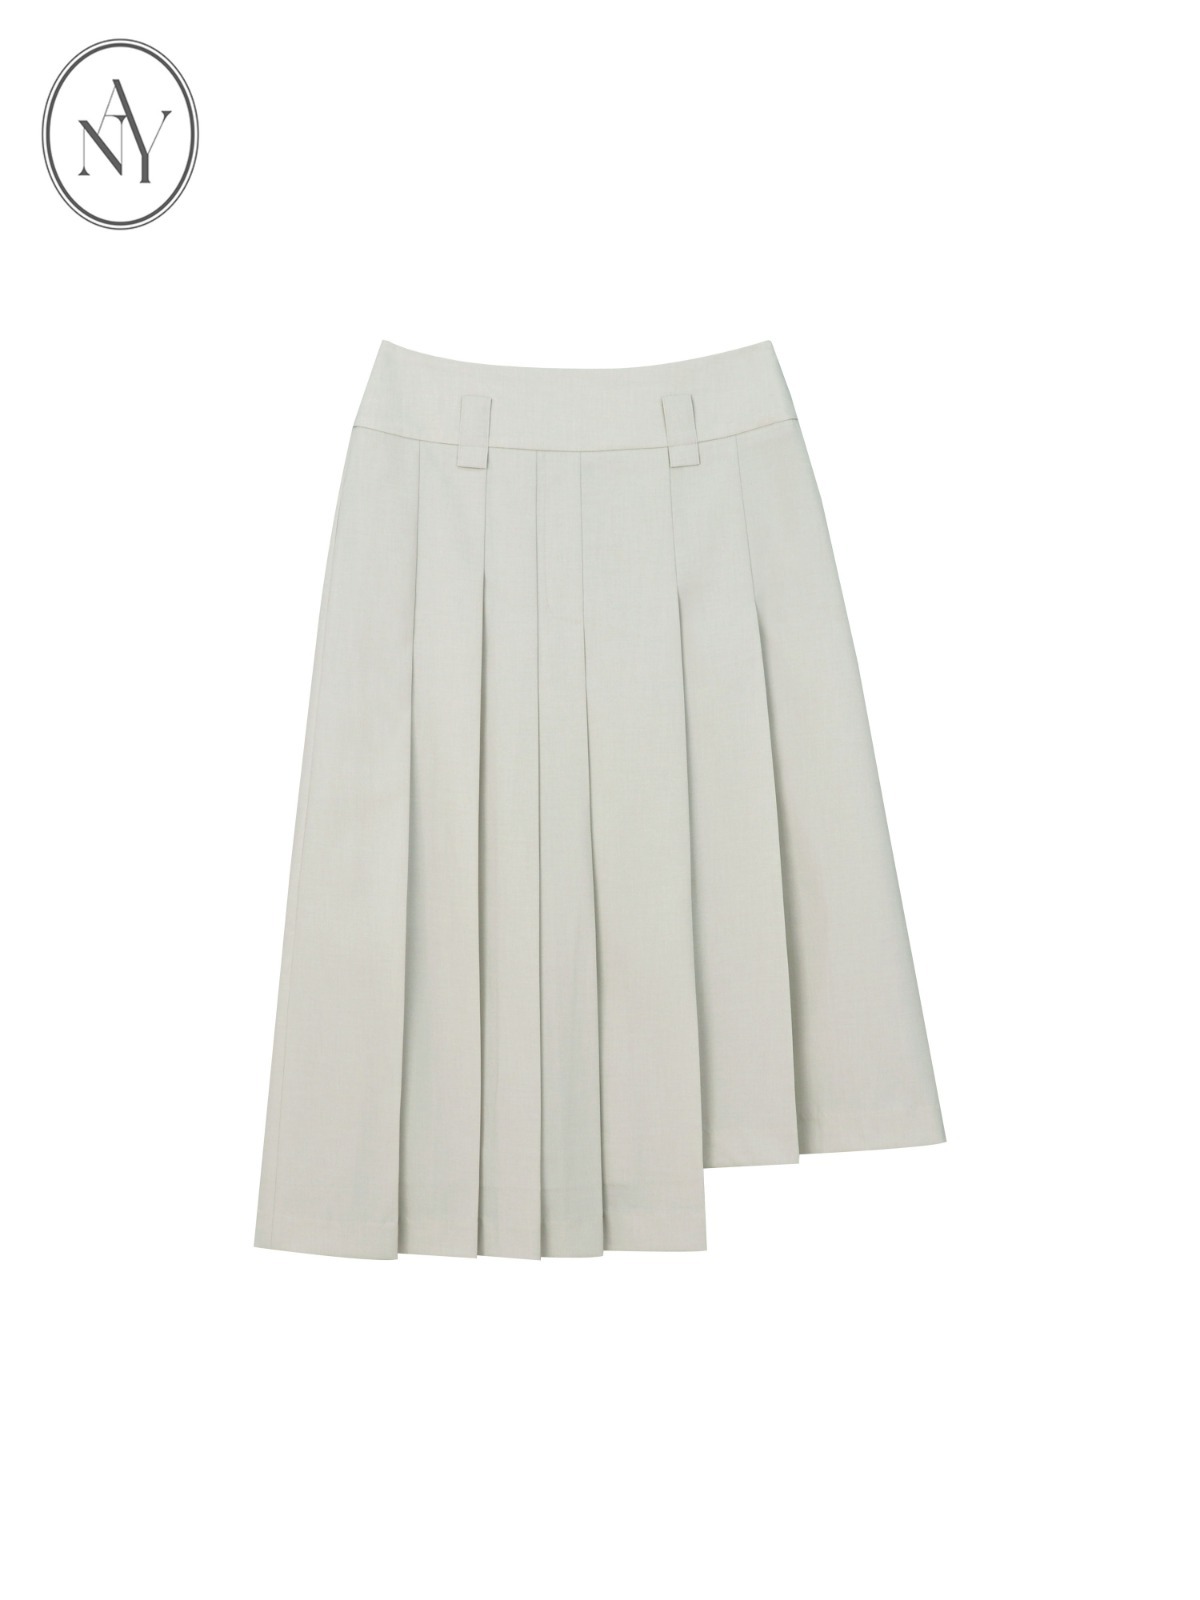 Pison Pleats Skirt